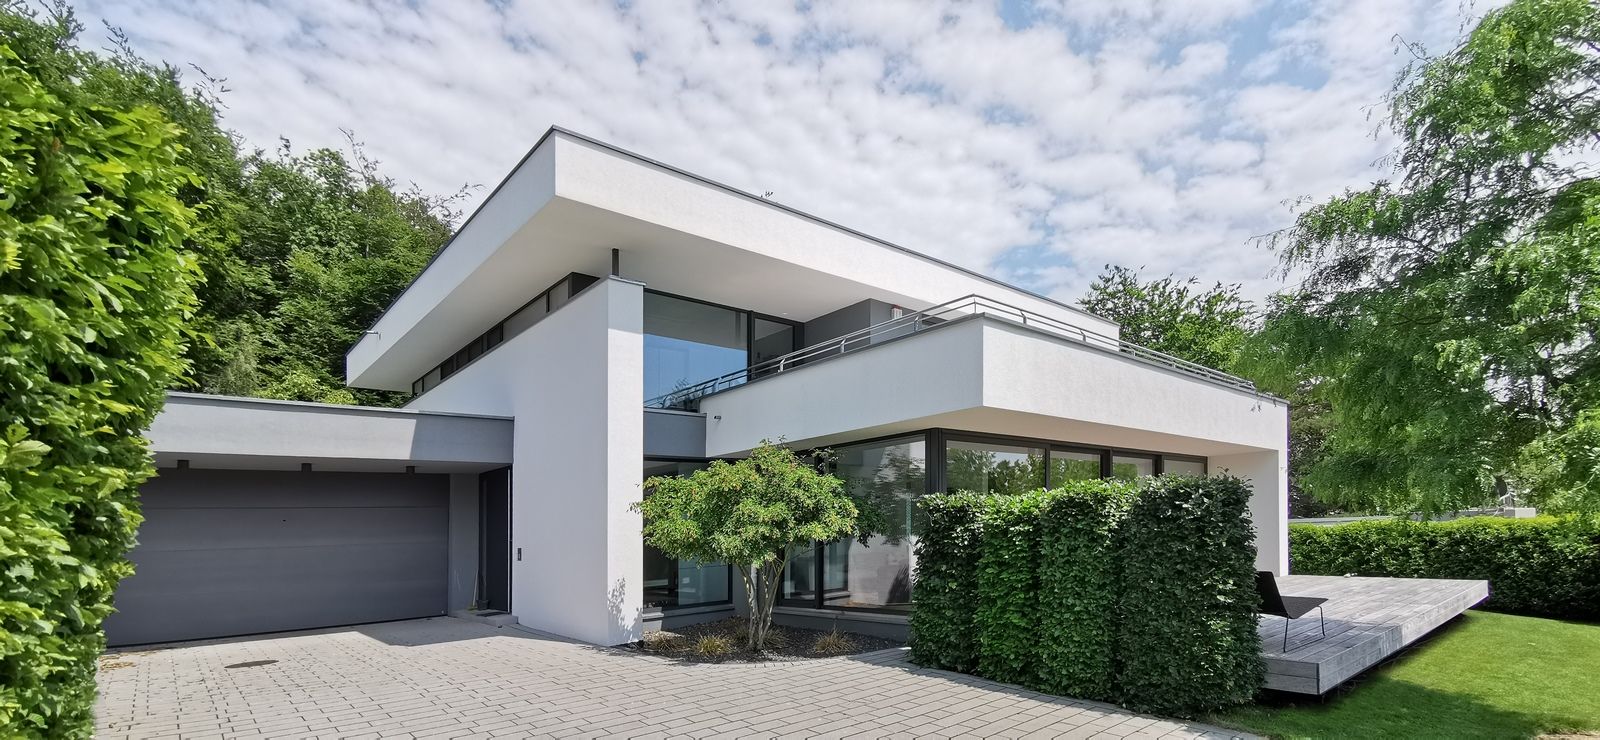 Moderne Villa mit Flachdach in Bad Soden, Avantecture GmbH Avantecture GmbH Biệt thự